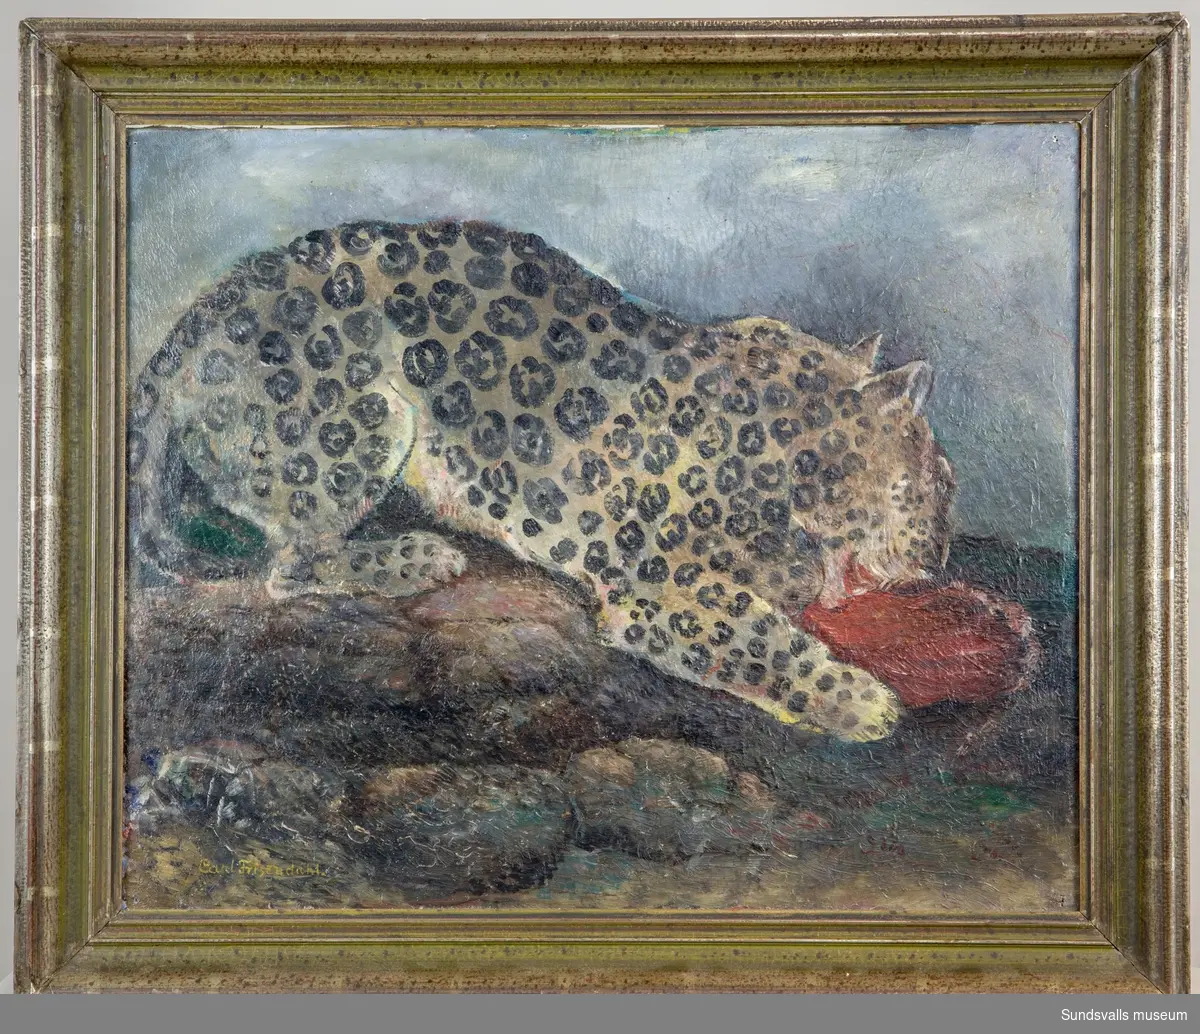 Målningen återger en leopard.